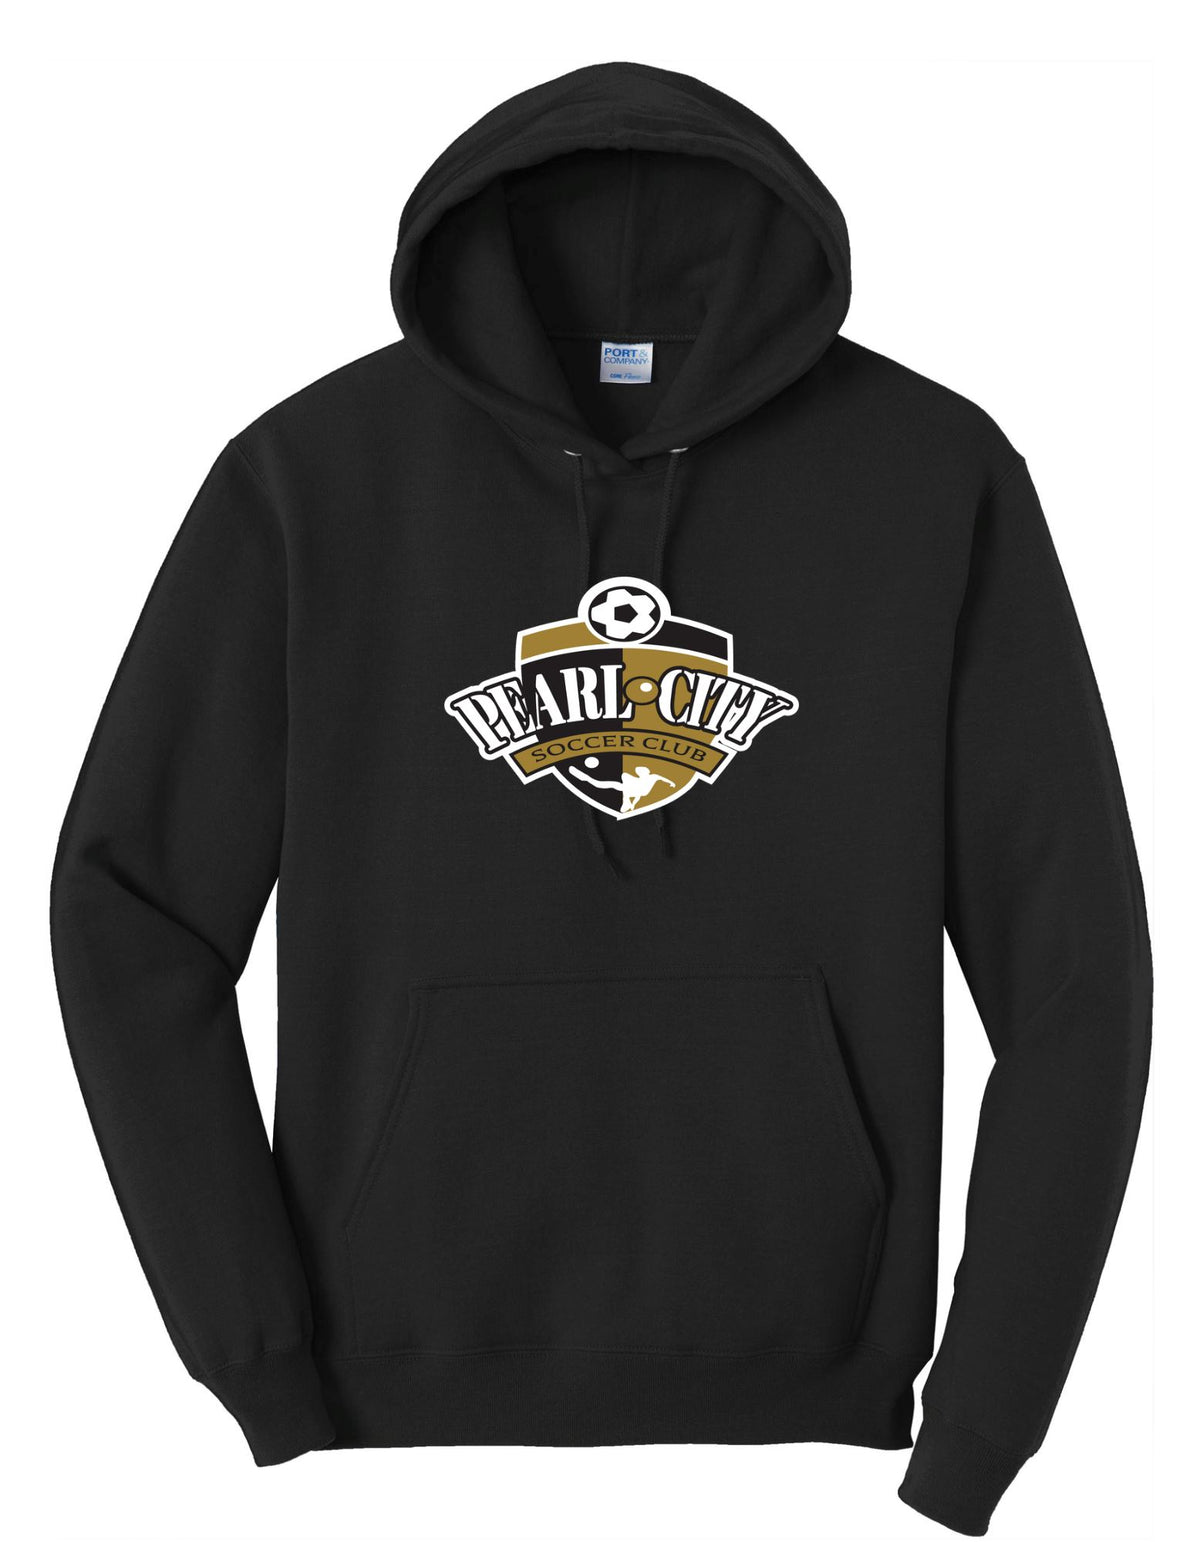 Pearl City Soccer Club Men&#39;s Fleece Hooded Sweatshirt Hooded Sweatshirt Goal Kick Soccer Adult X-Small Jet Black 